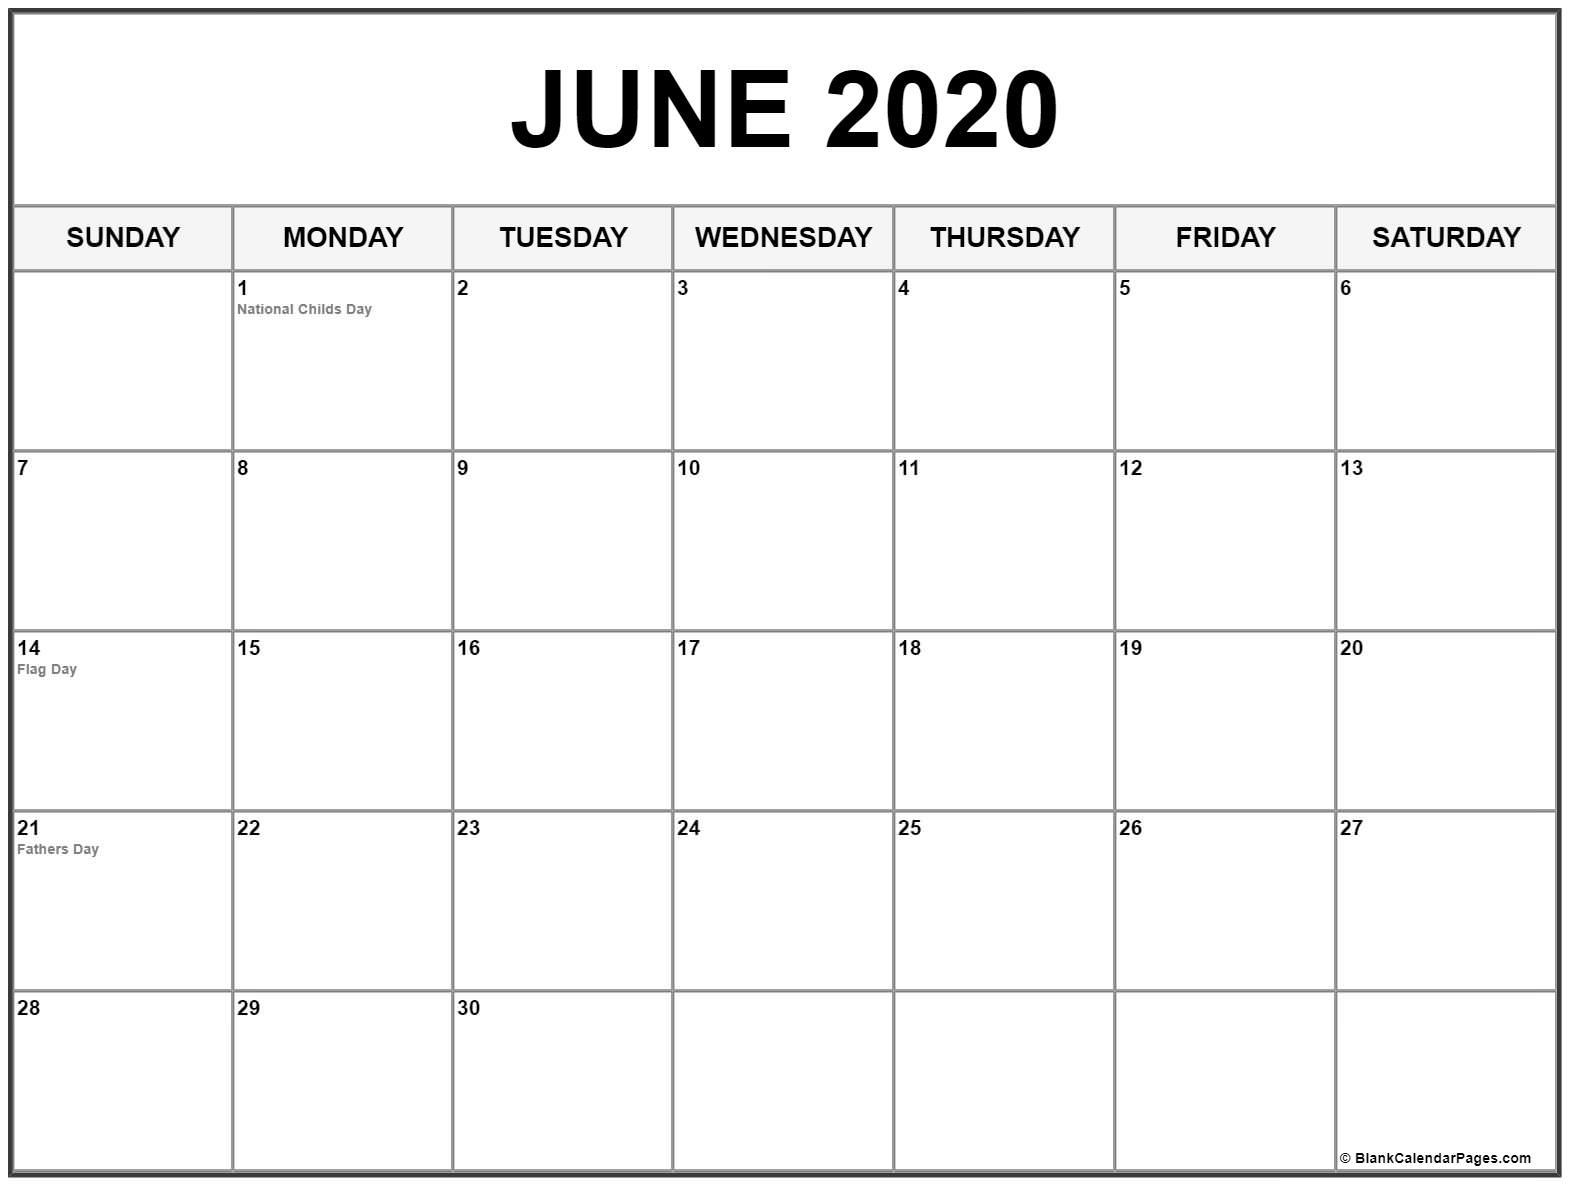 June 2020 Calendar With Holidays | Printable Calendar Perky 2020 Calendar With Us Holidays Printable